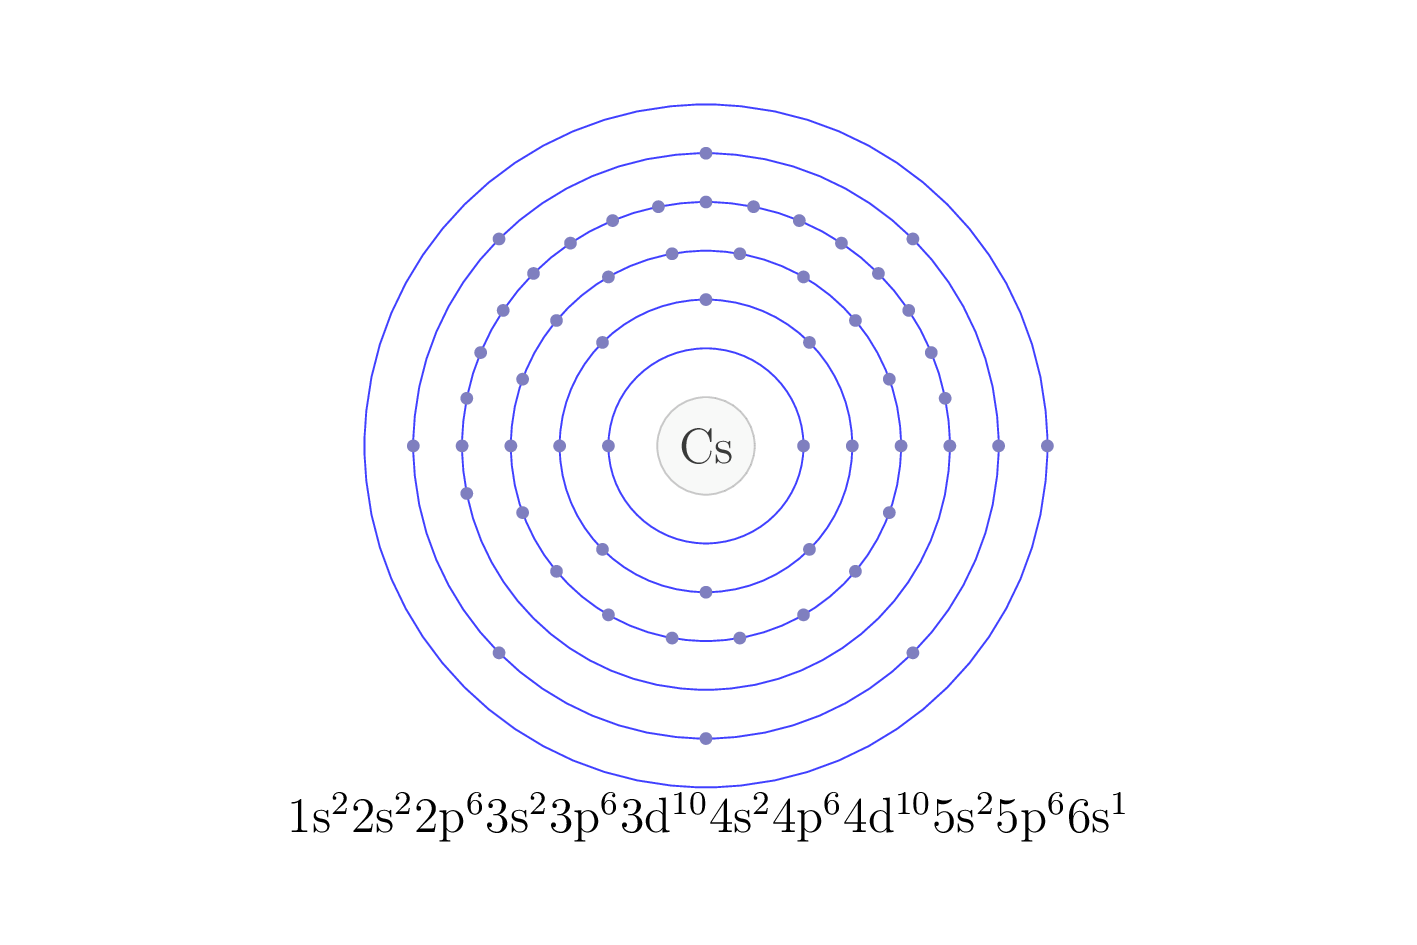 electron configuration of element Cs